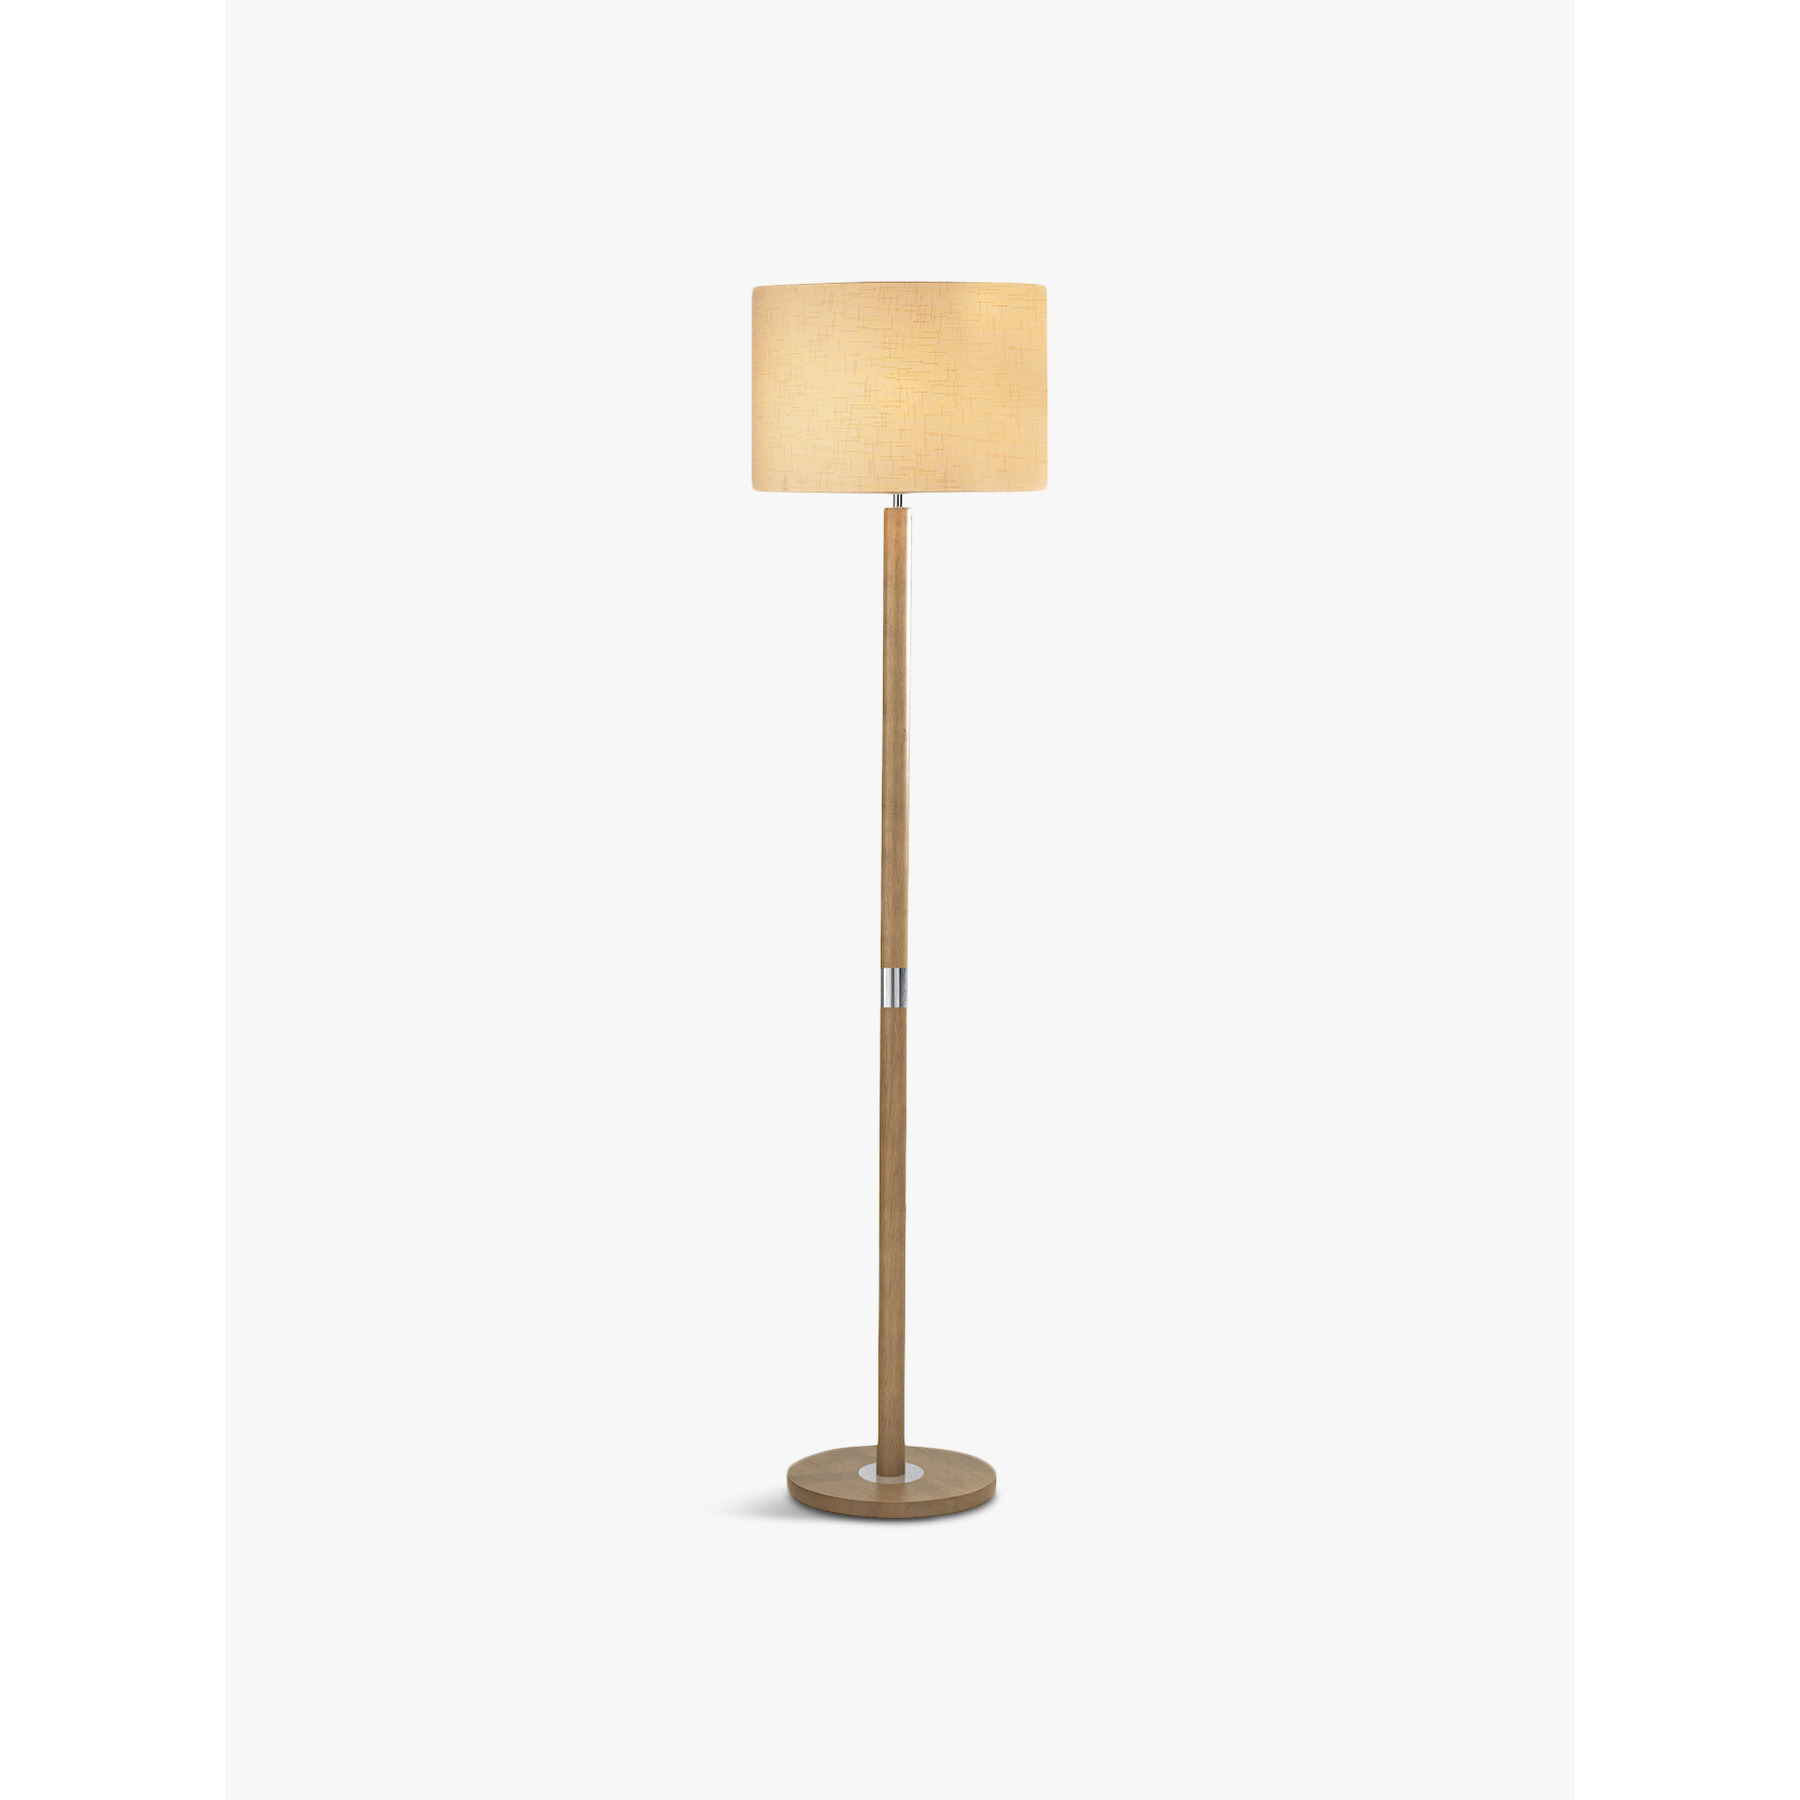 Dar Lighting Avenue Floor Lamp Light Wood with Shade Brown - image 1